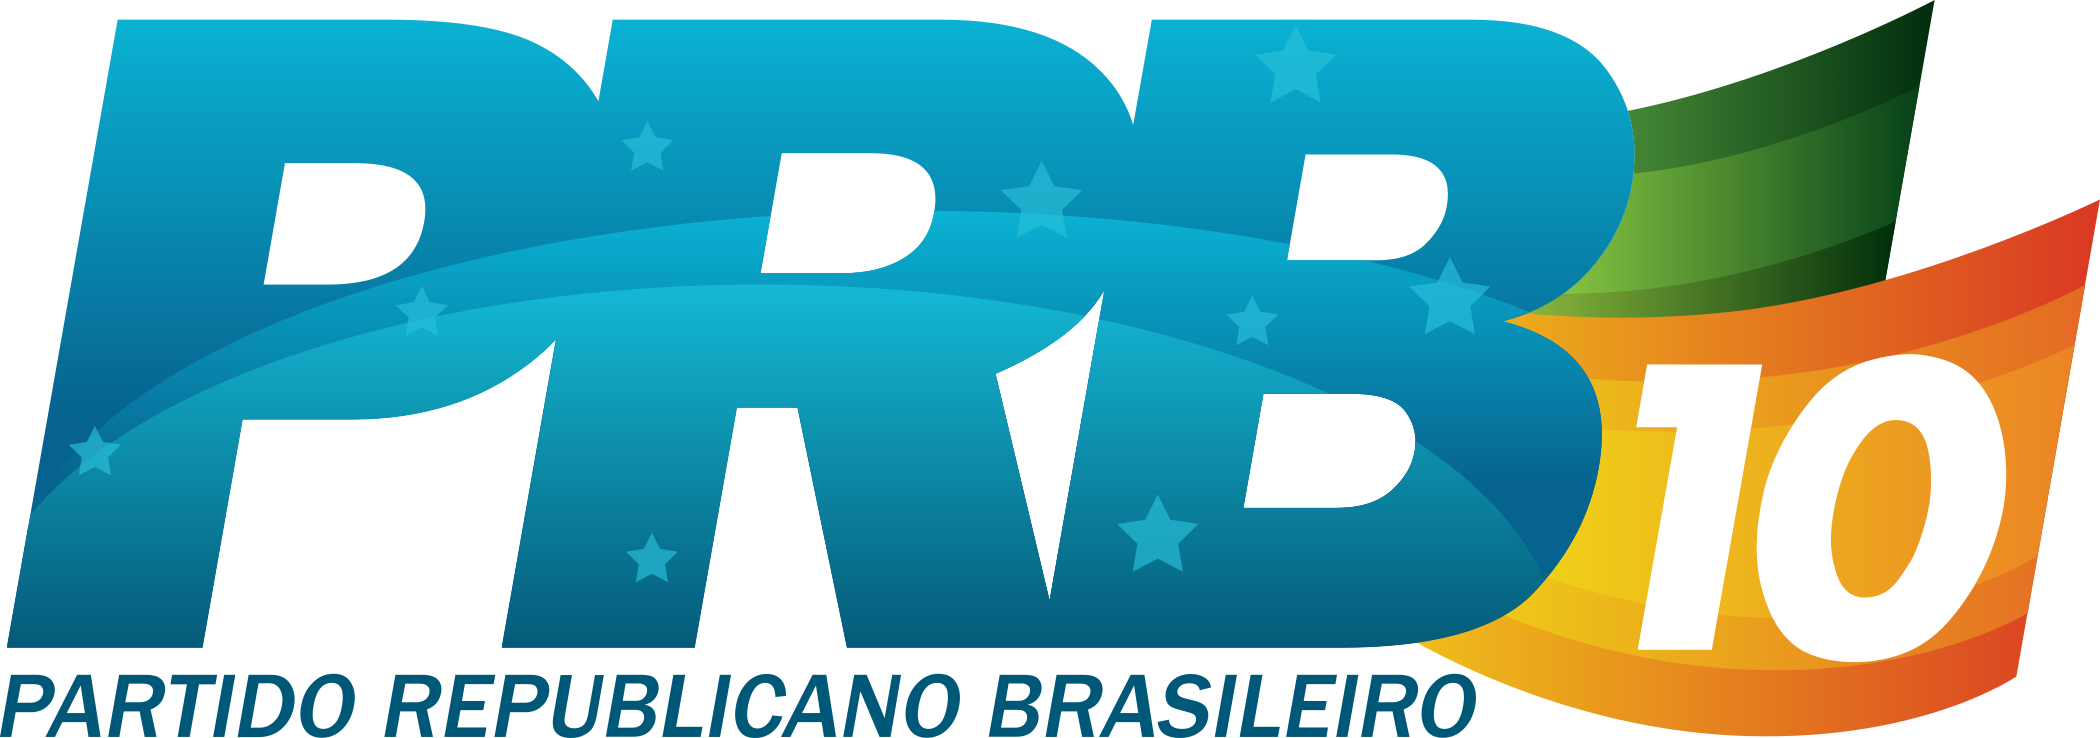 PRB Logo, Partido Republicano Brasileiro Logo.